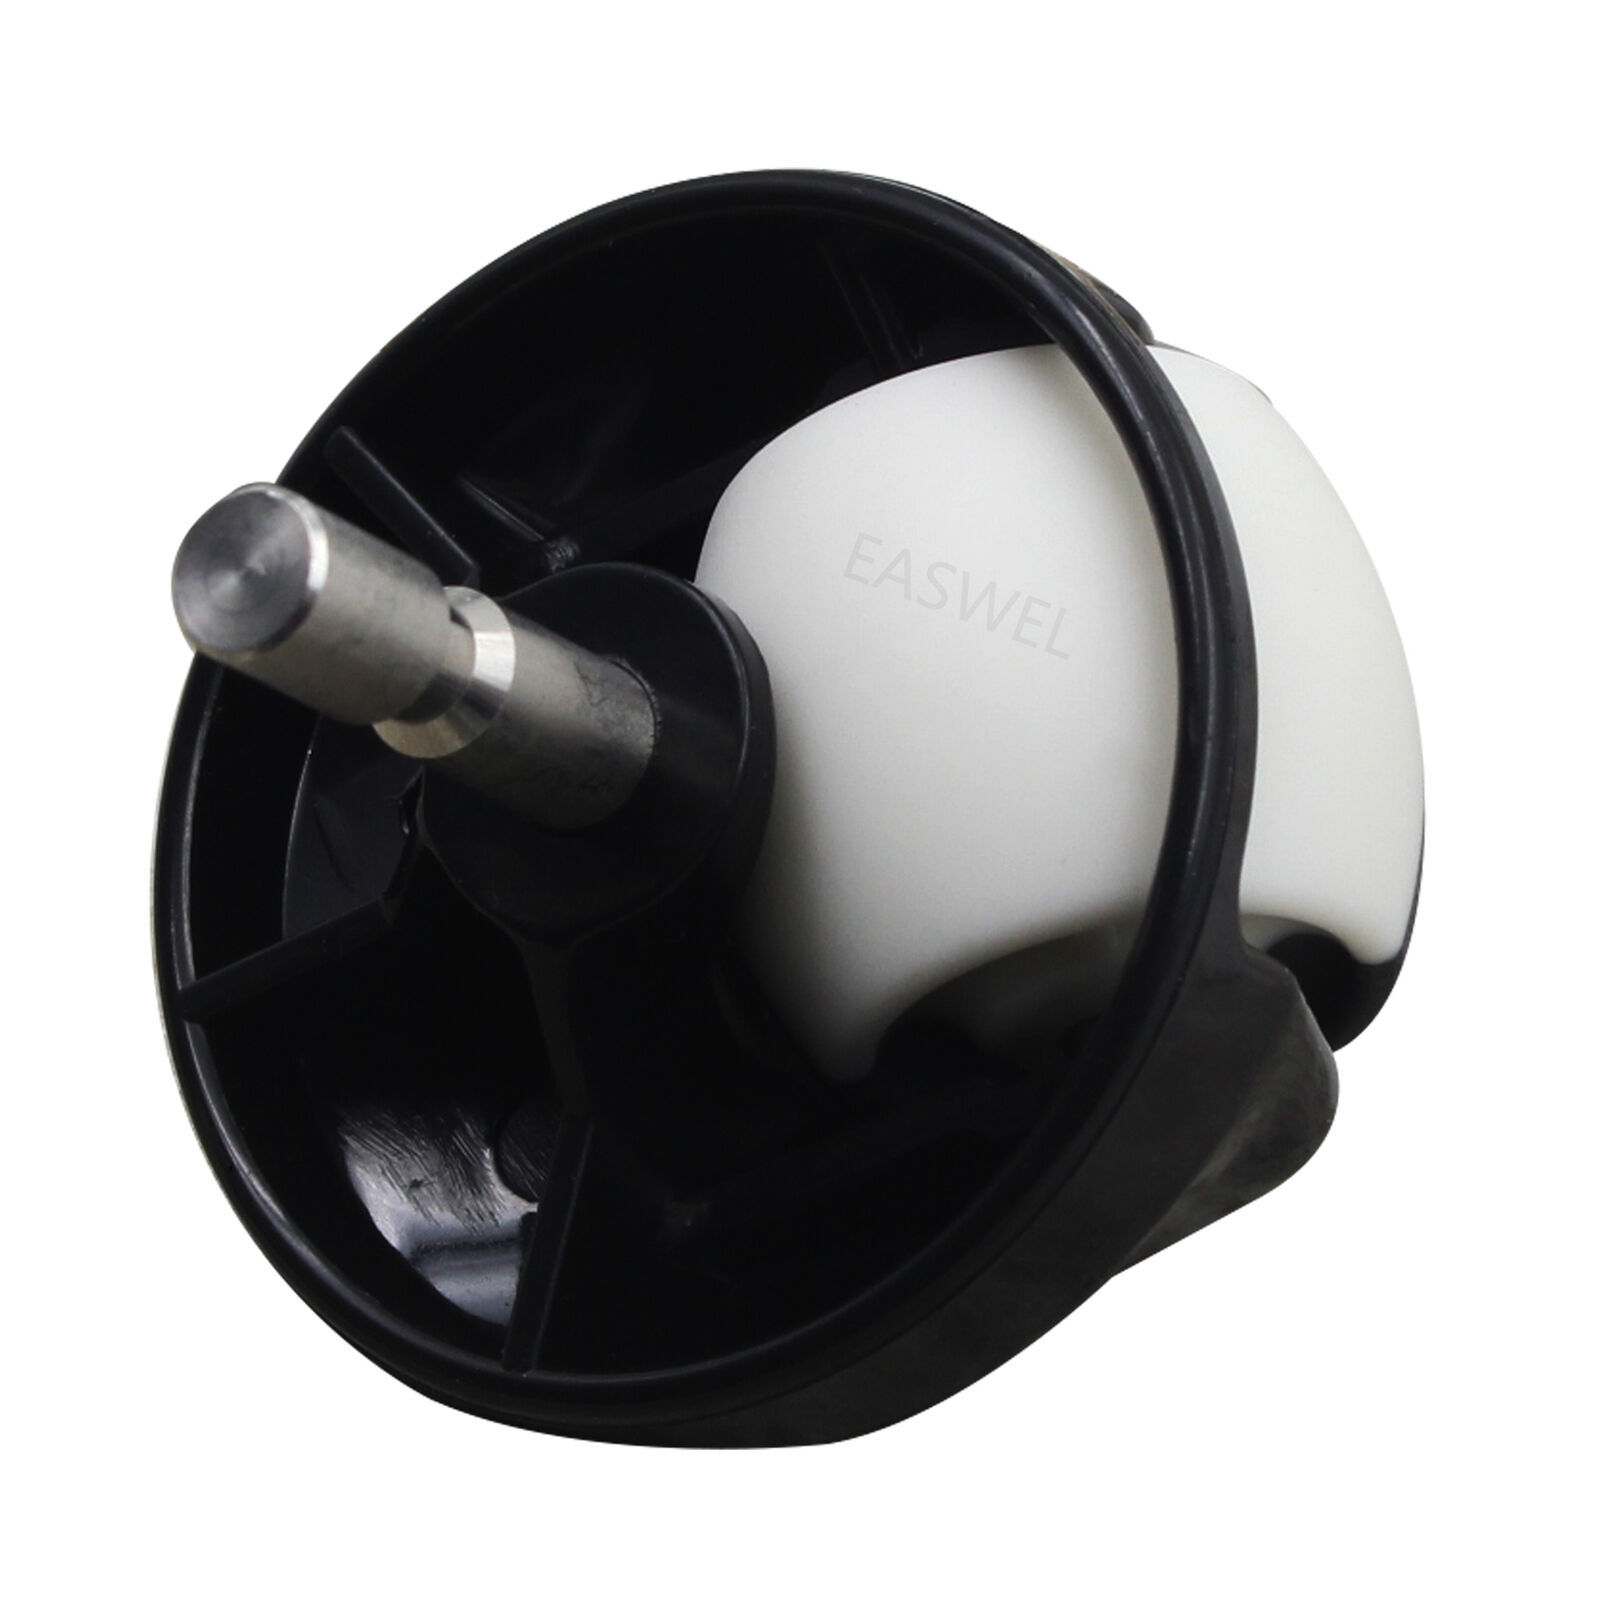 New Slides in Front Caster Wheel For ILIFE V4 V5s Pro Robotic Vacuum Cleaner - $22.99